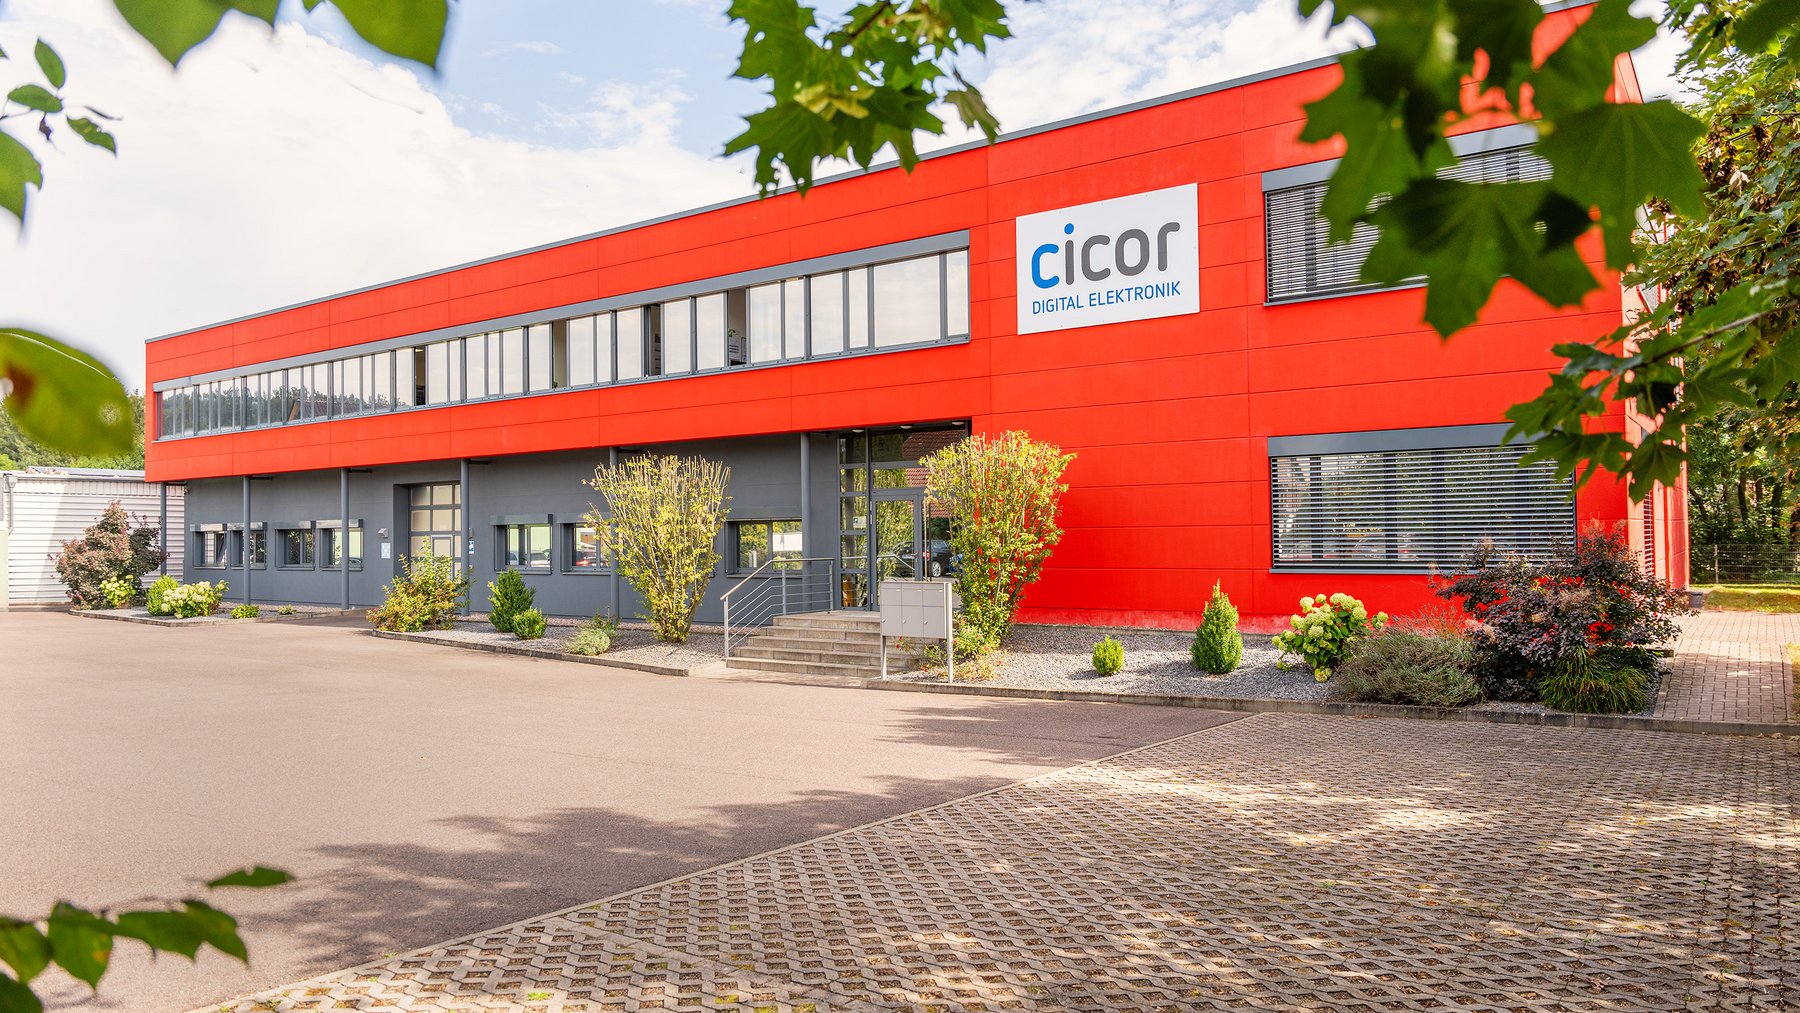 Cicor production site in Wutha-Farnroda, Germany